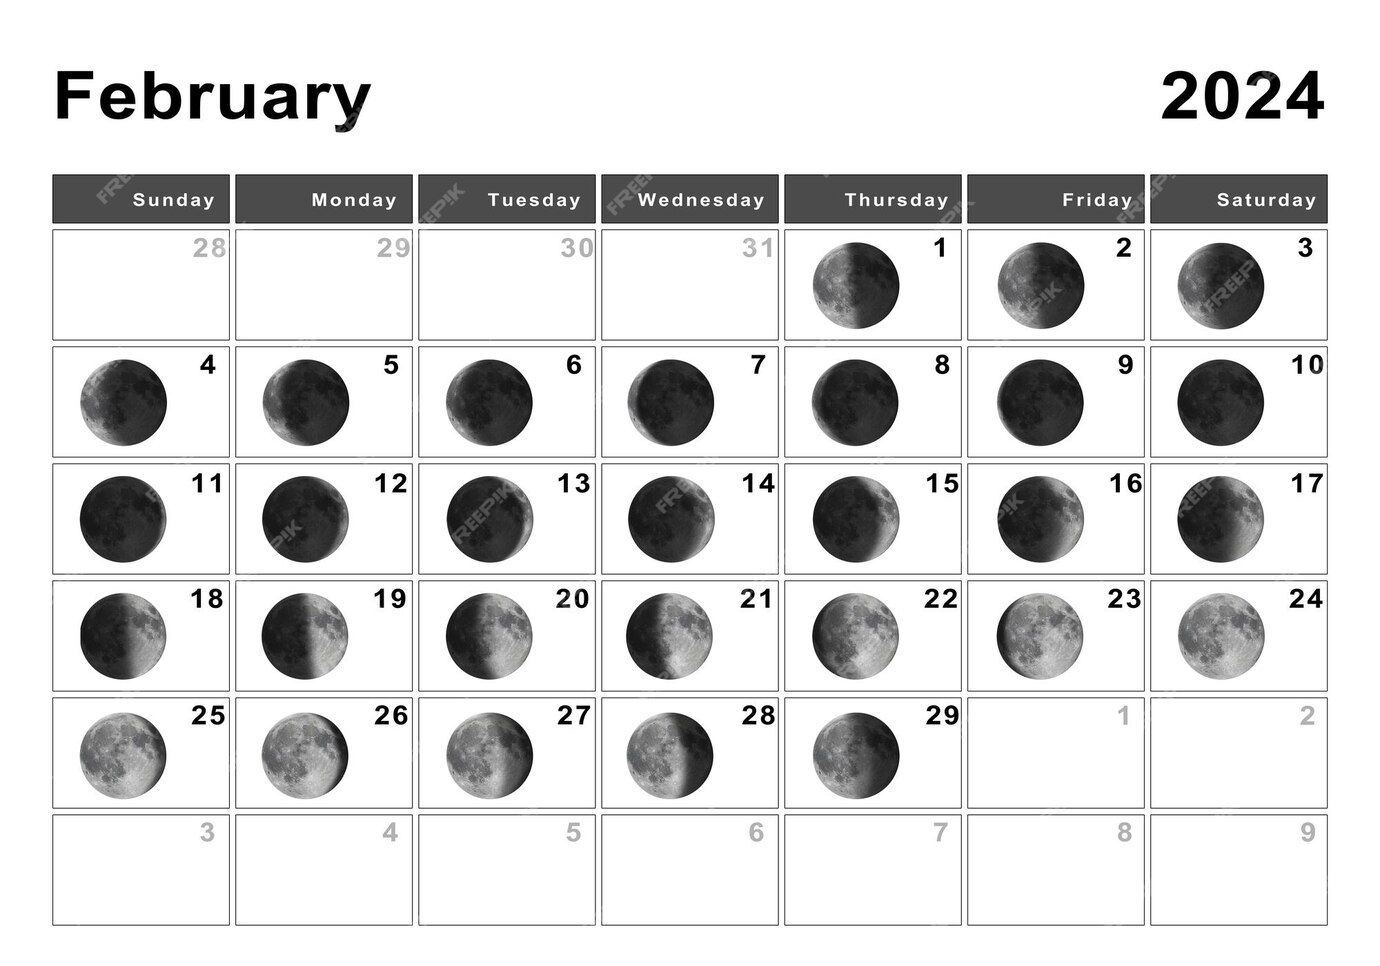 Febrero 2024 calendario lunar, ciclos lunares, fases lunares Foto Premium